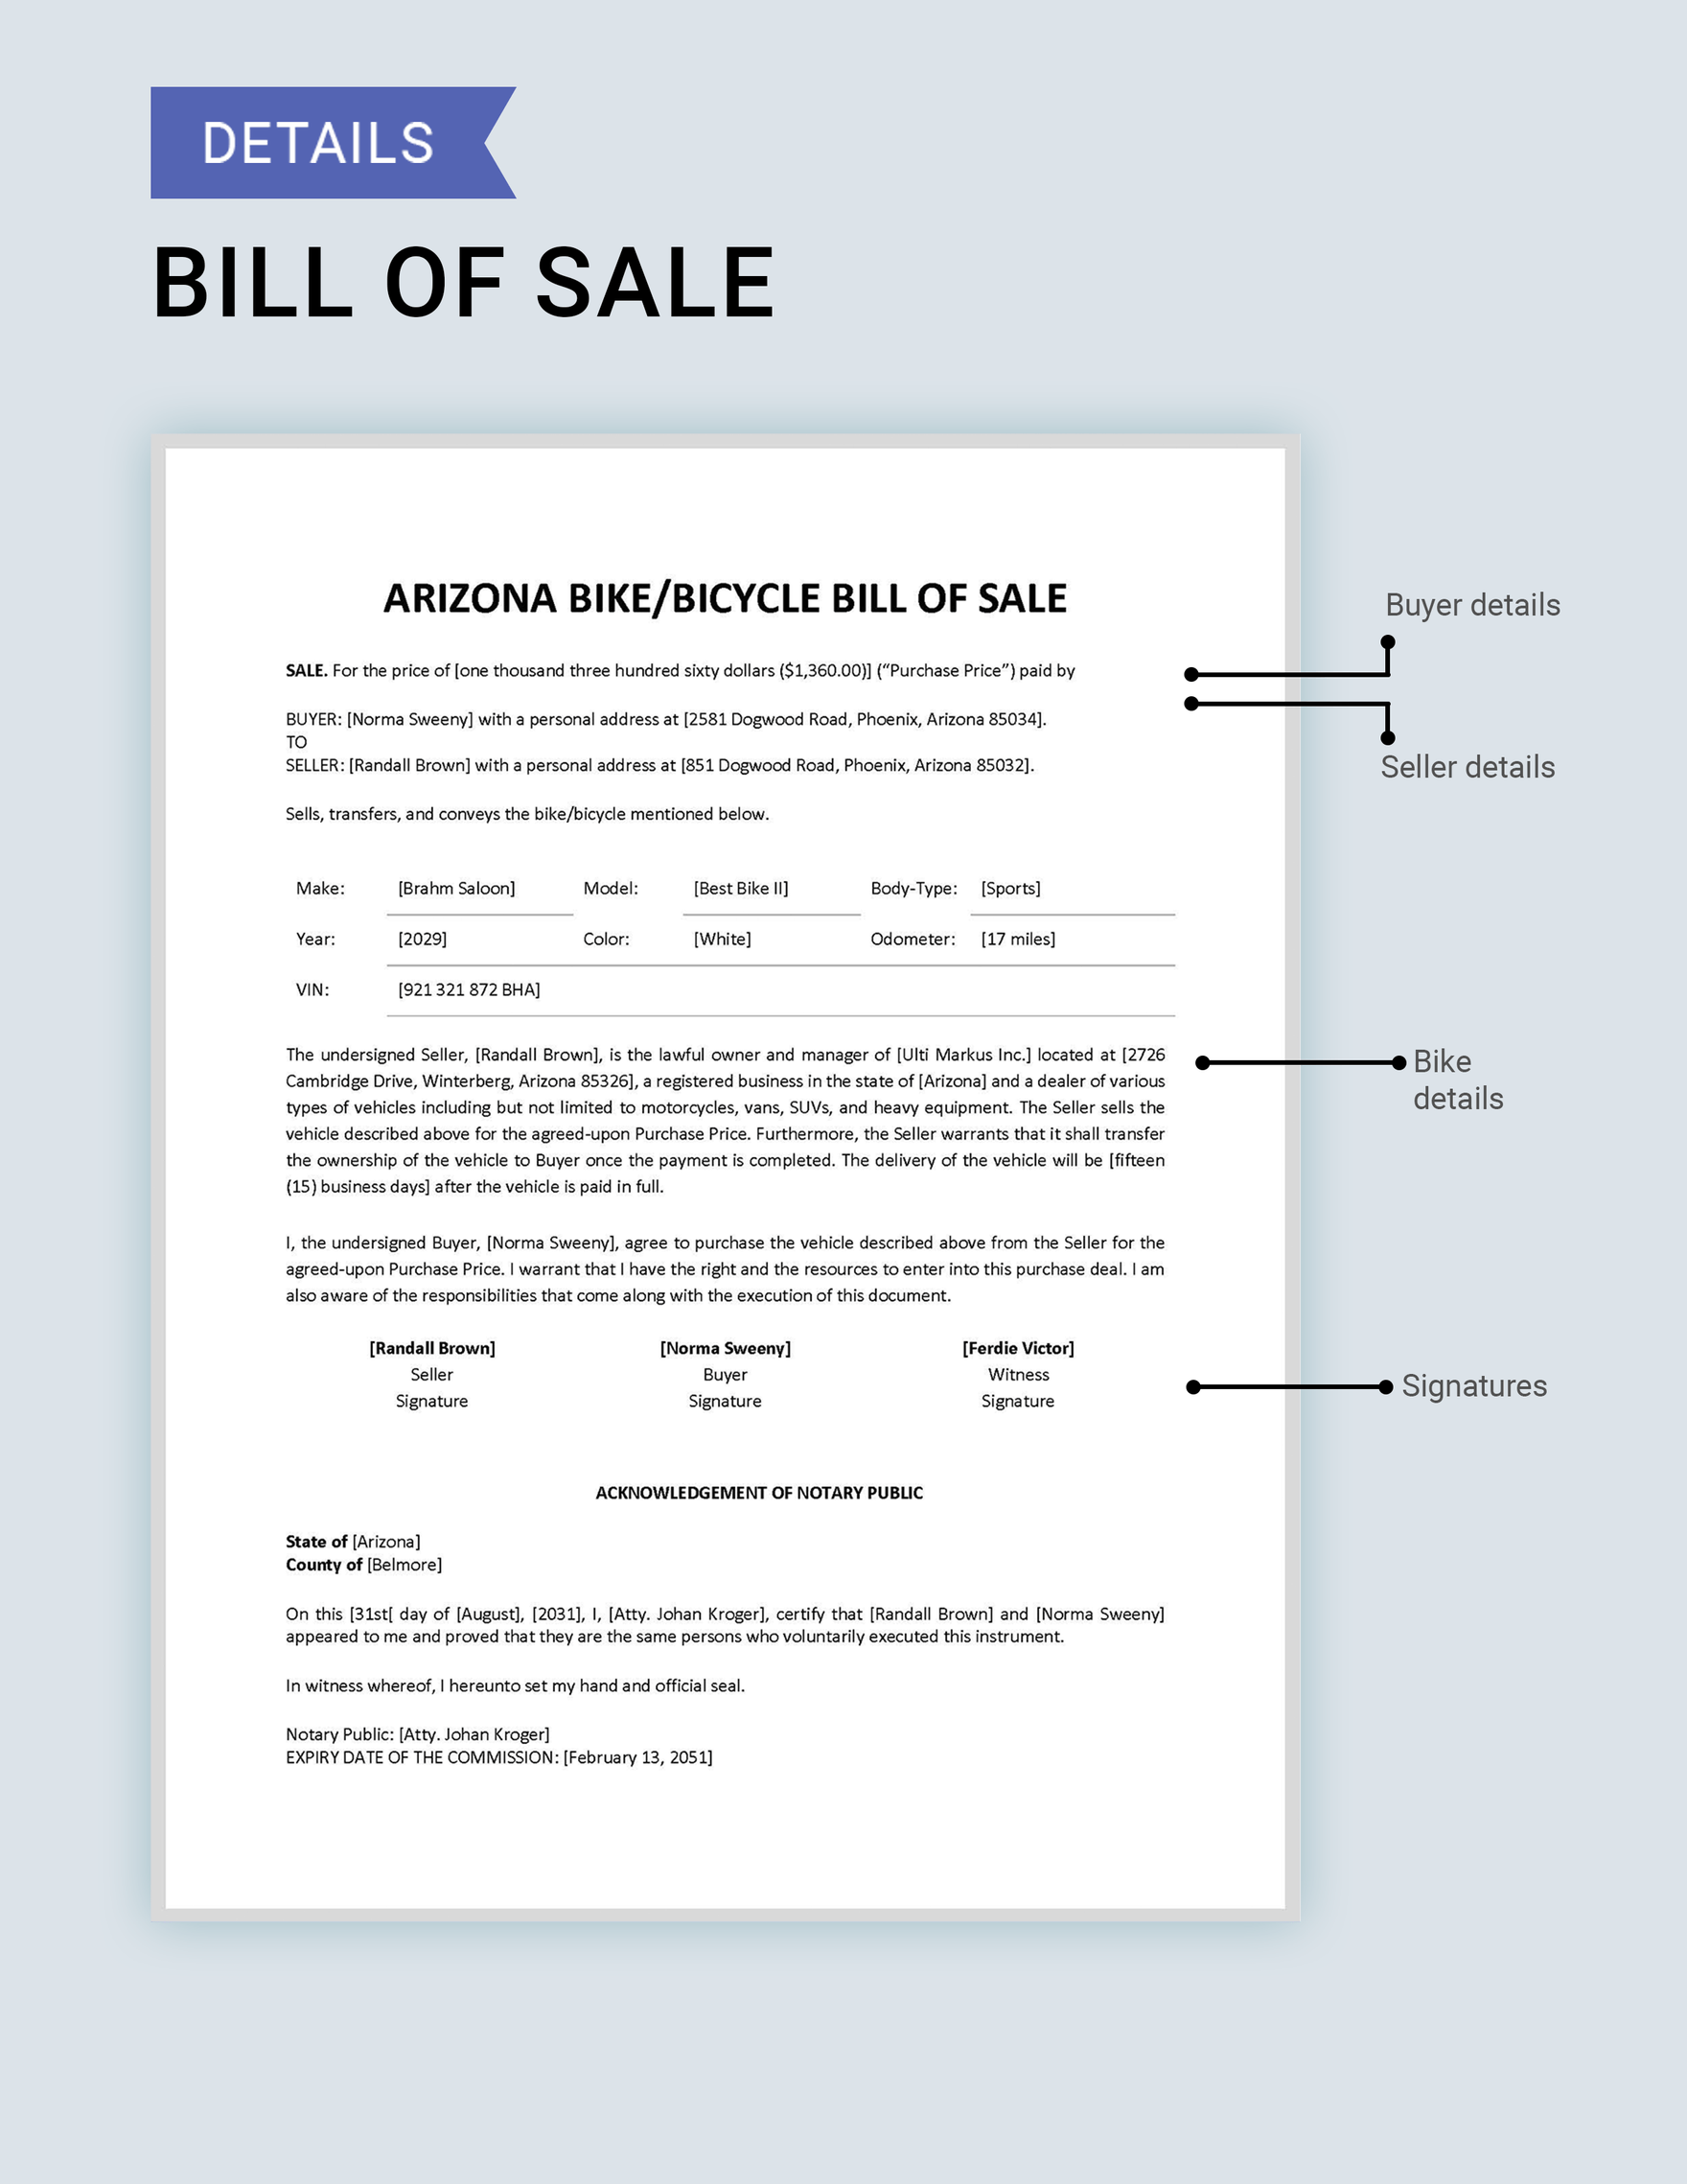 Arizona Bike/ Bicycle Bill of Sale Form Template